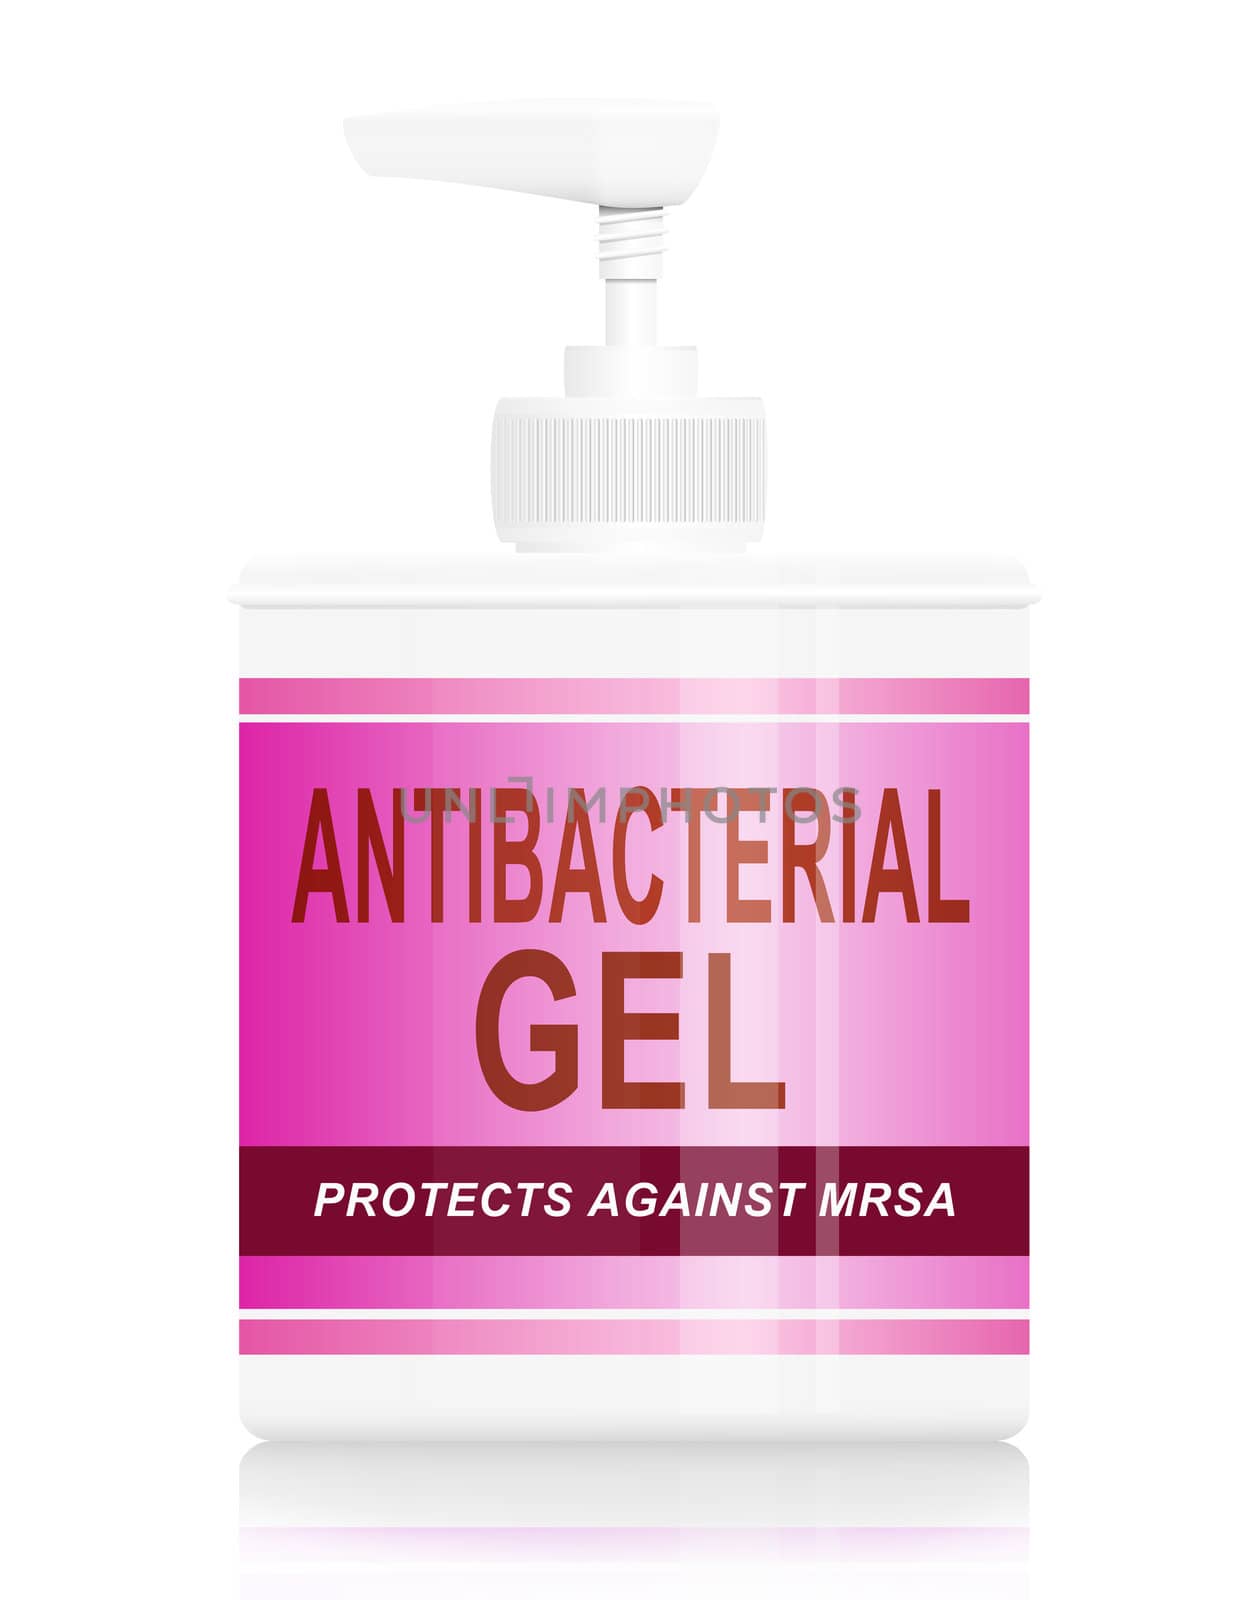 Illustration depicting a single antibacterial gel dispenser arranged over white background.